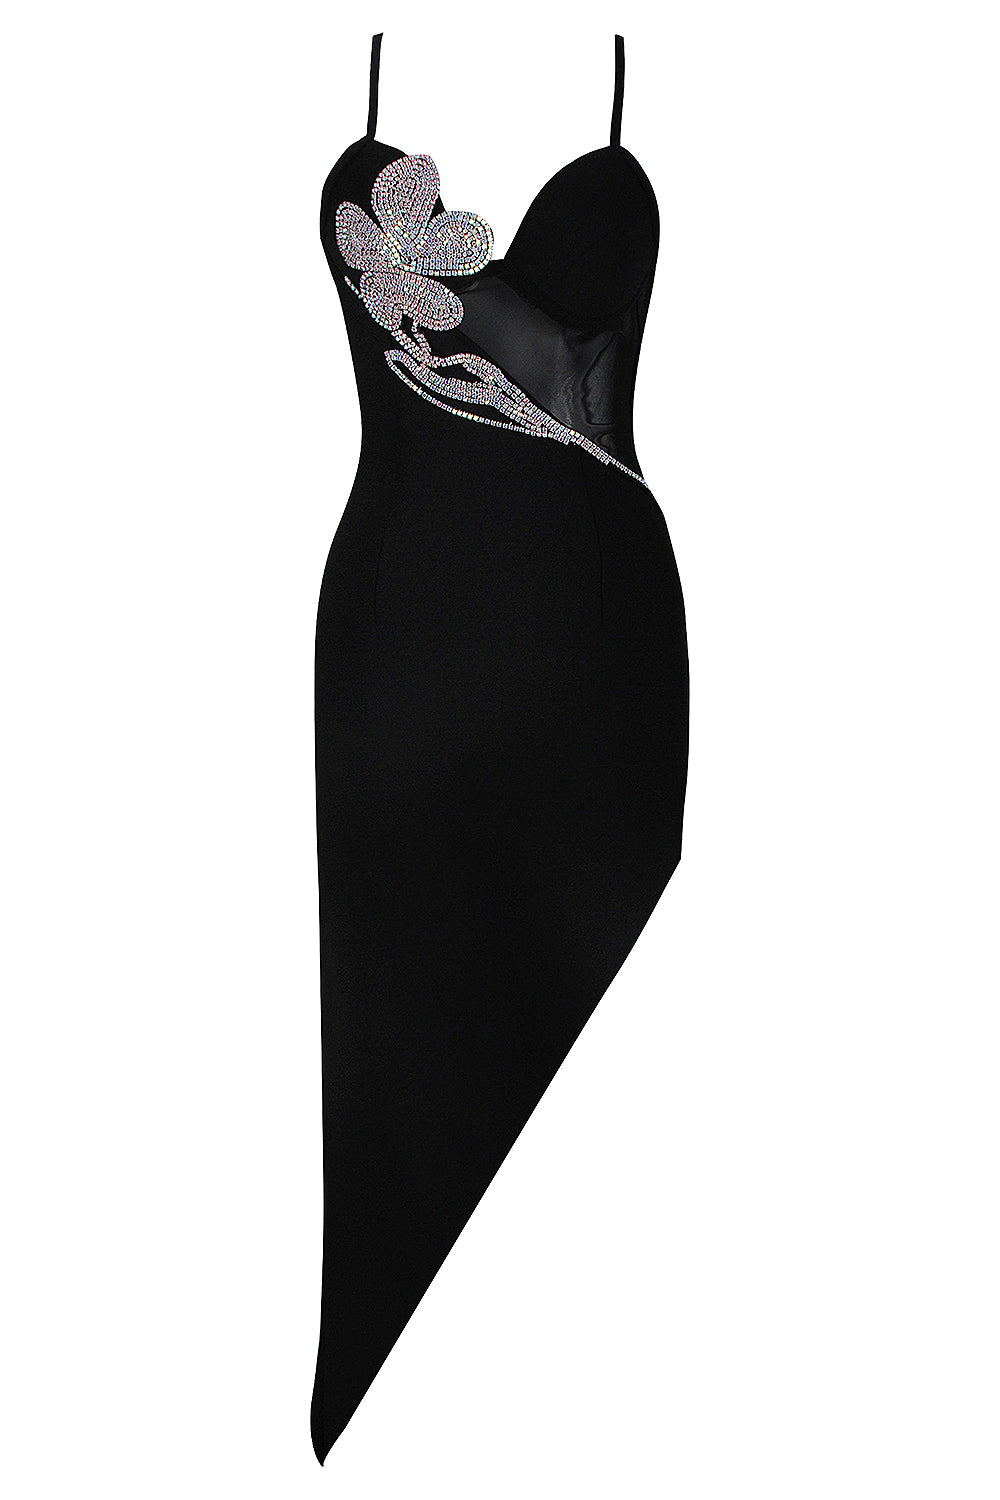 Vestido midi preto com tiras de cristal e flor lateral dividida